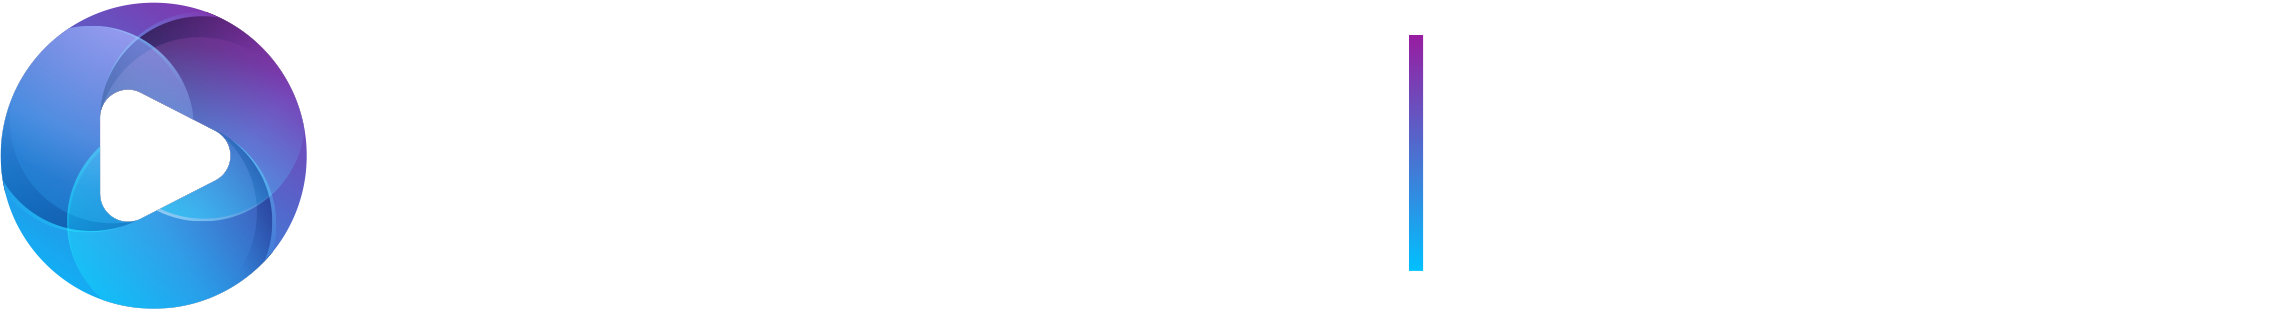 Logo Videoma Monitor Negativo 